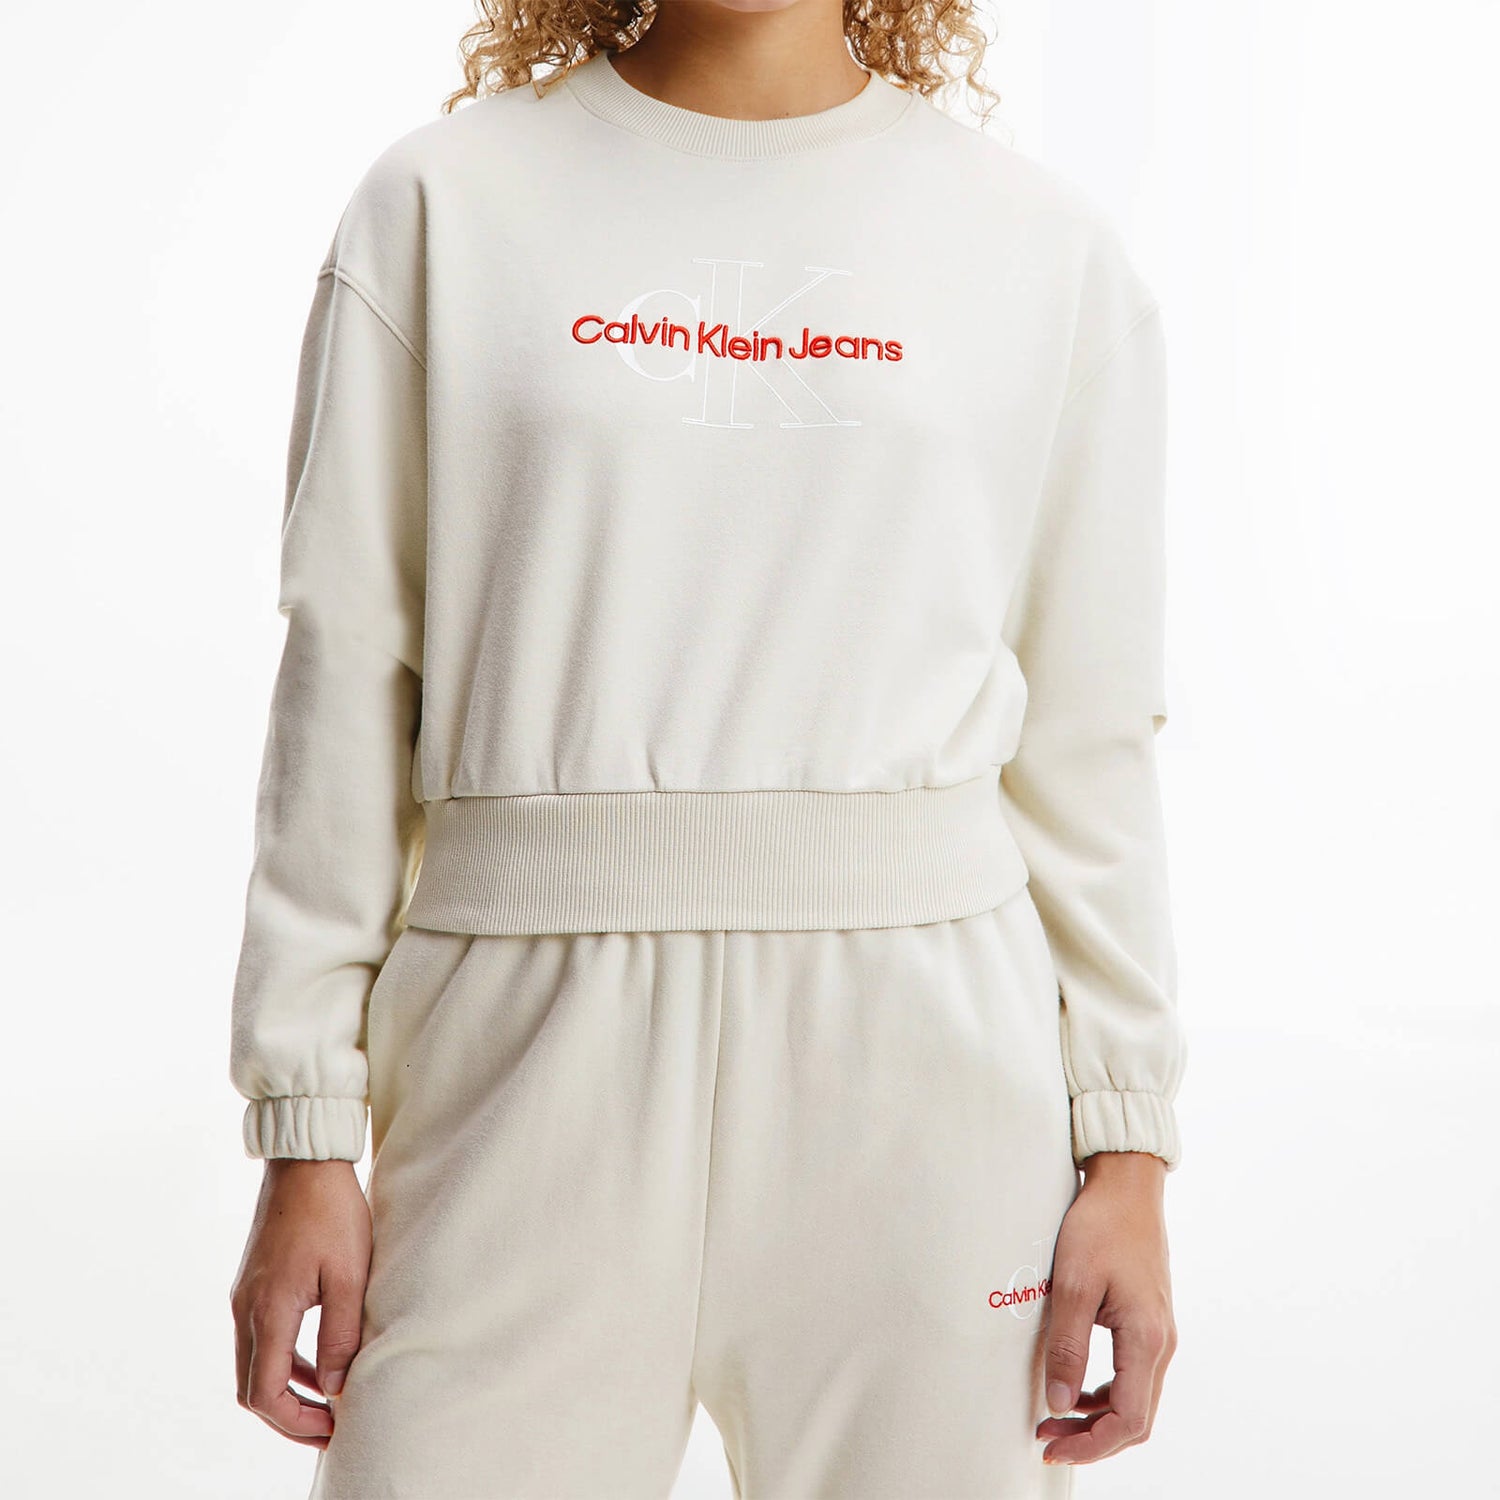 Calvin Klein Jeans Women's Two Tone Monogram Crop Crew Neck Sweatshirt - Eggshell - XS